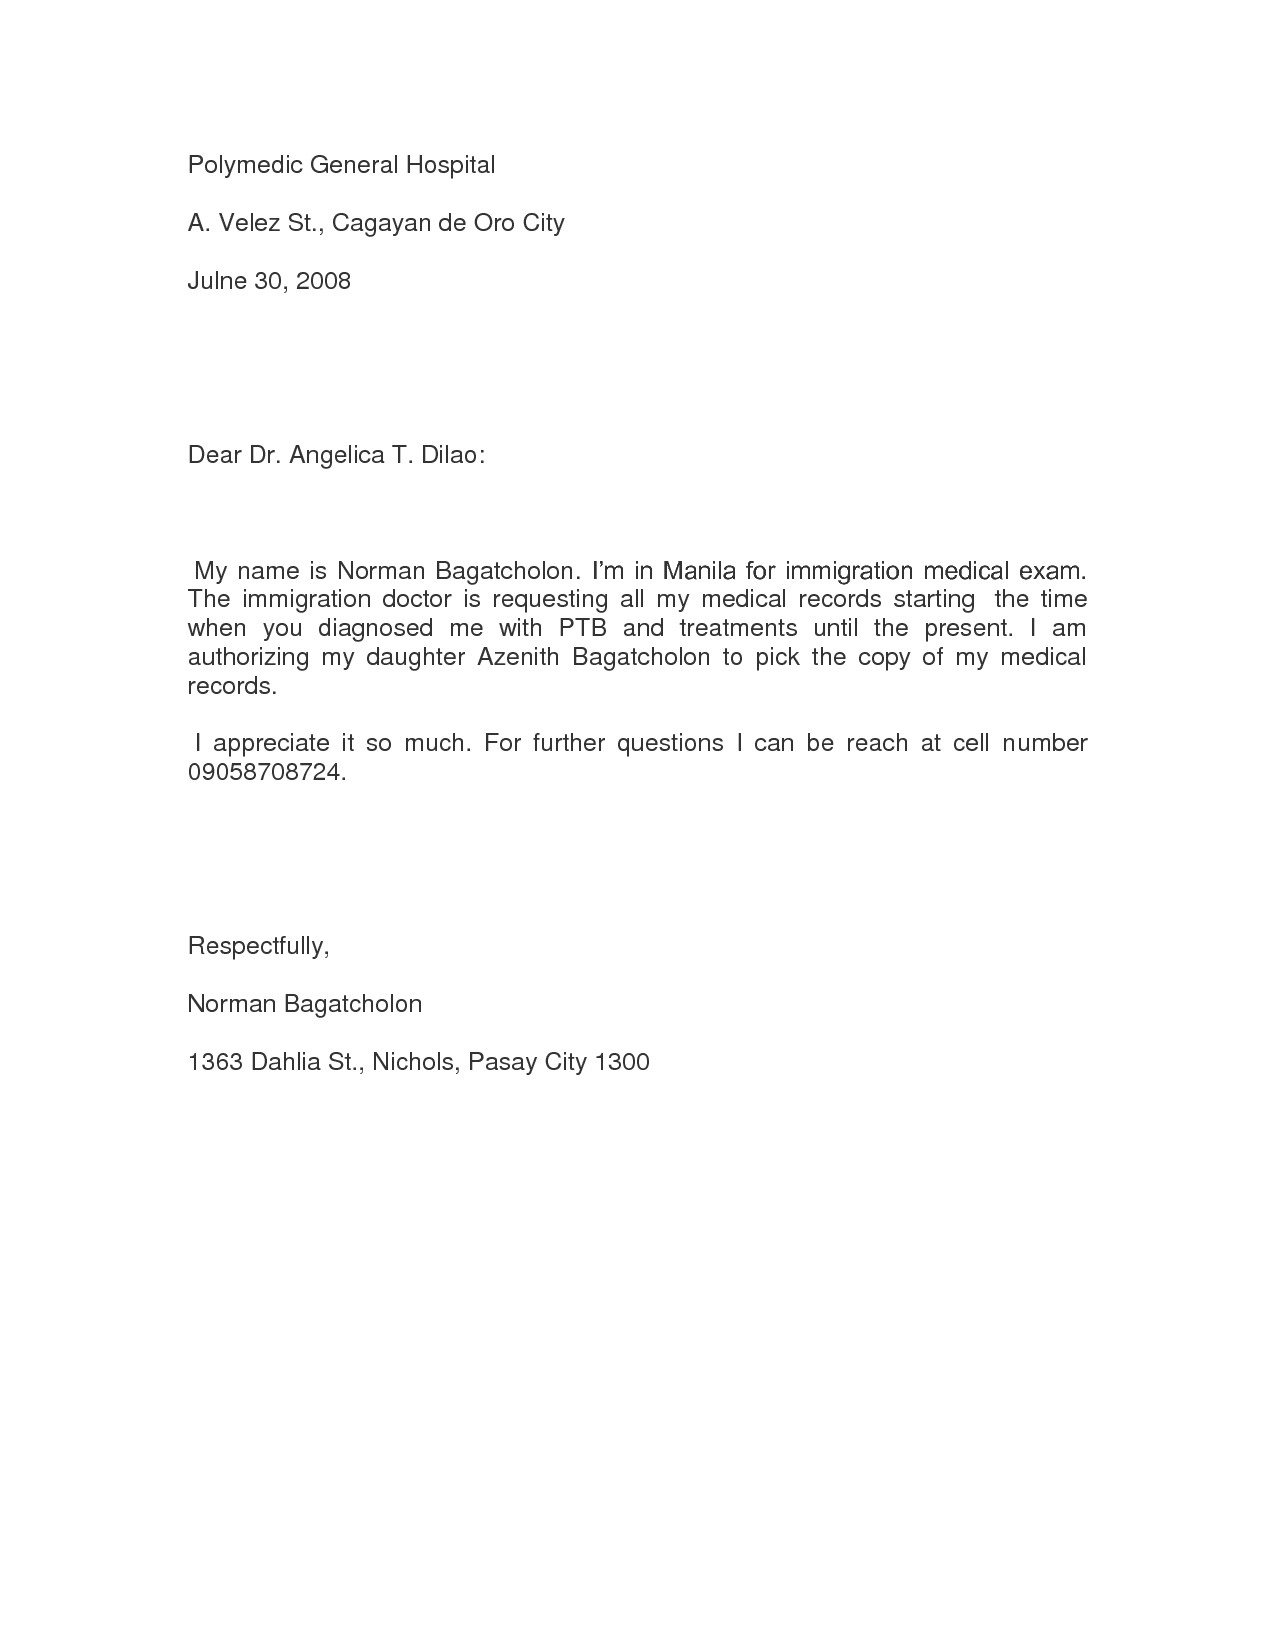 Medical assistant Resignation Letter Best S Of Medical Resignation Letter Medical